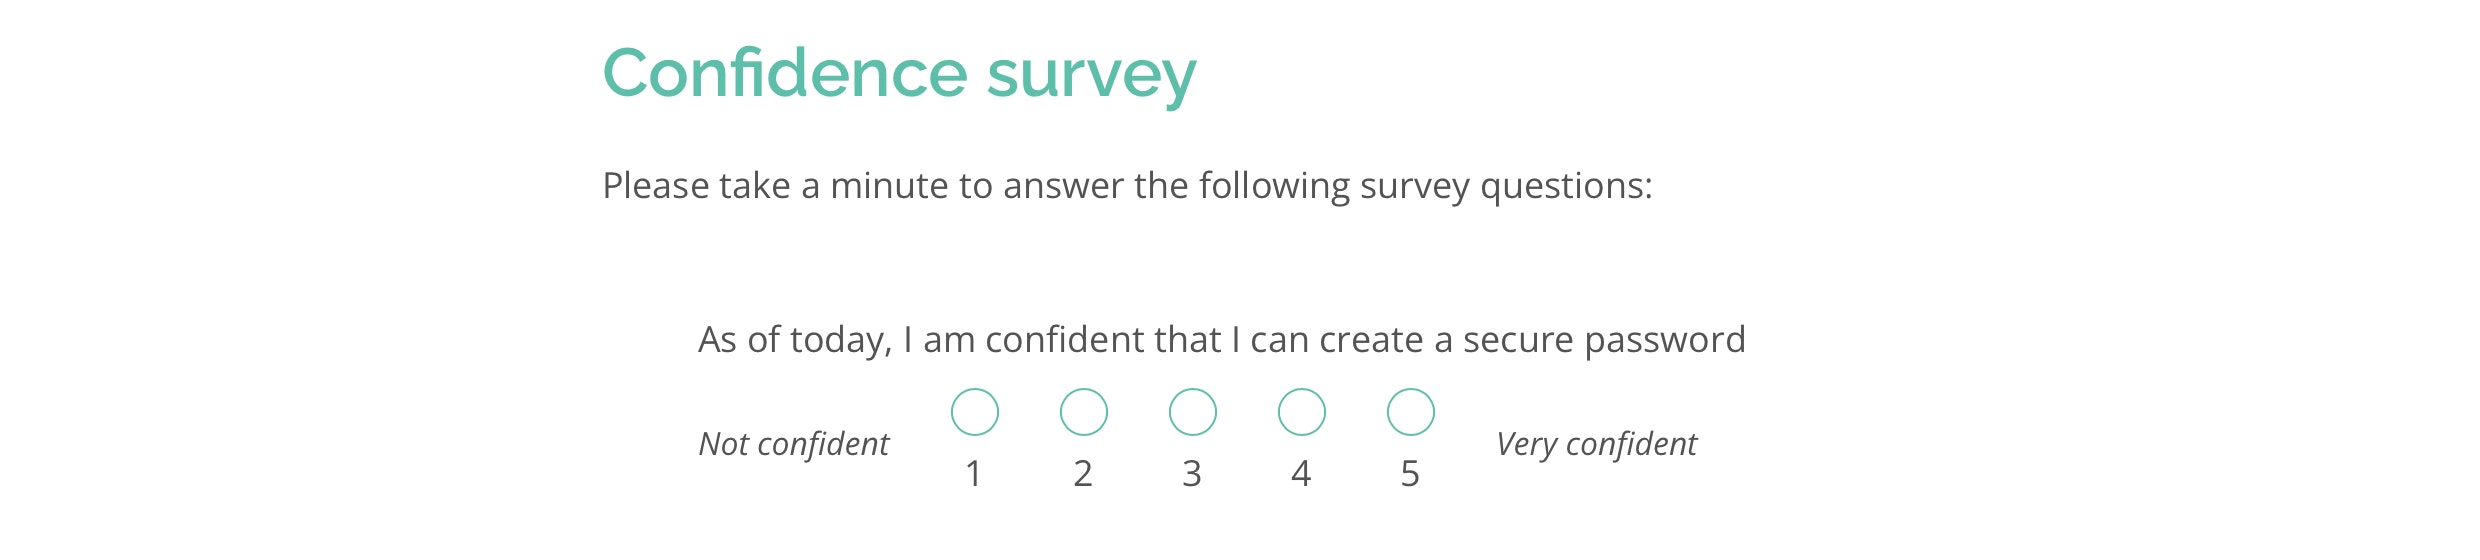 Confidence survey